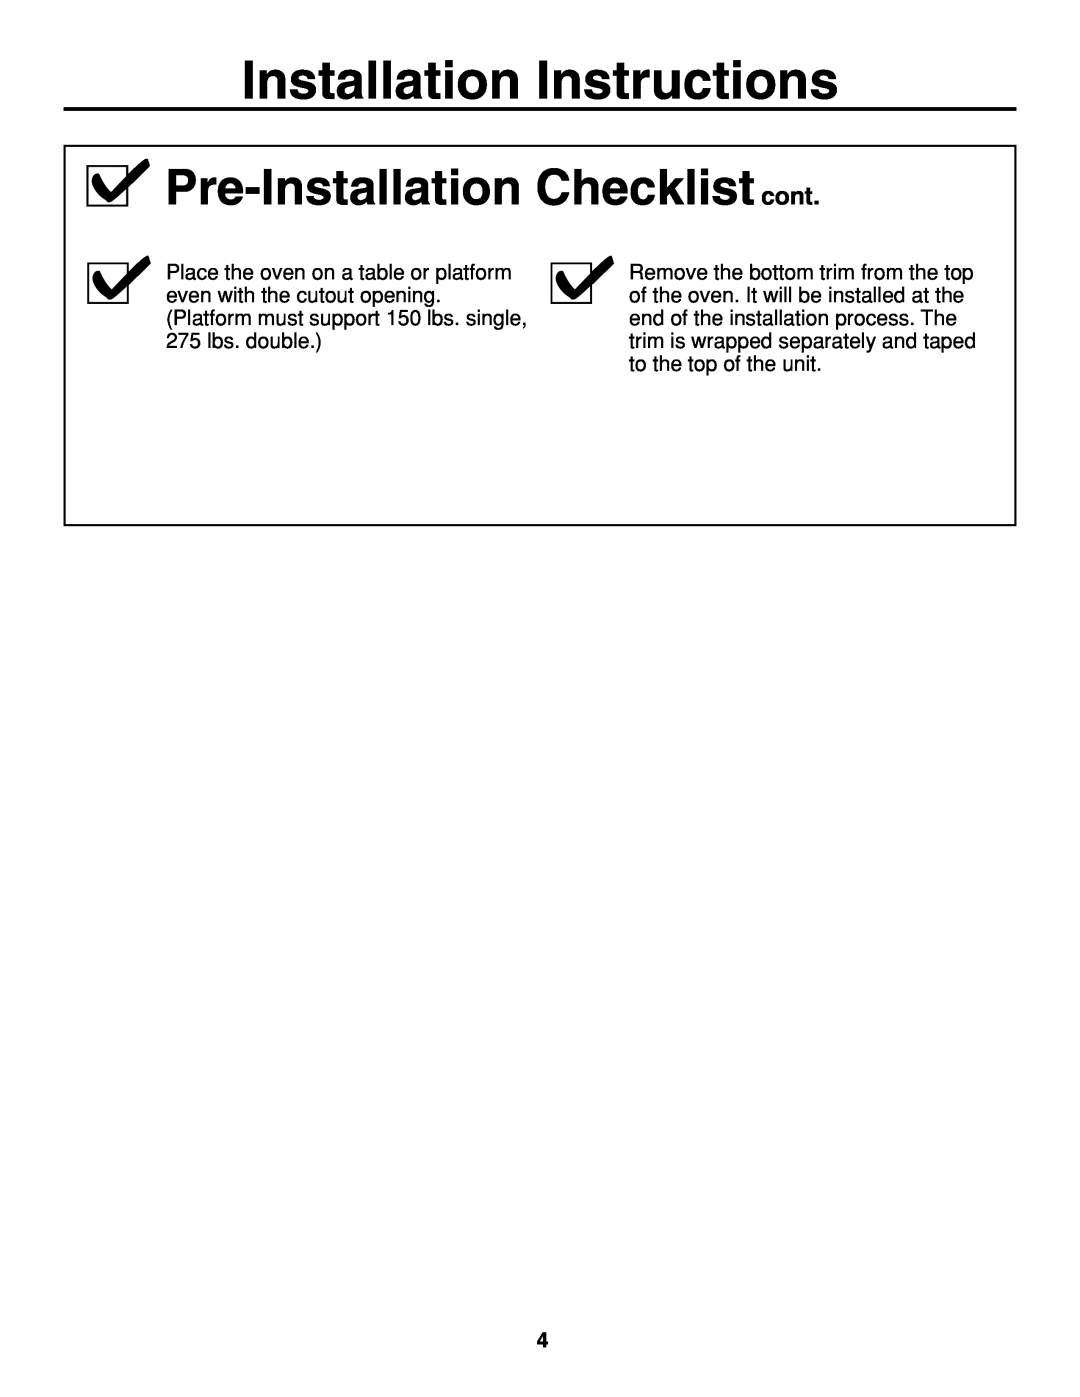 GE JTP20 installation instructions Pre-Installation Checklist cont, Installation Instructions 